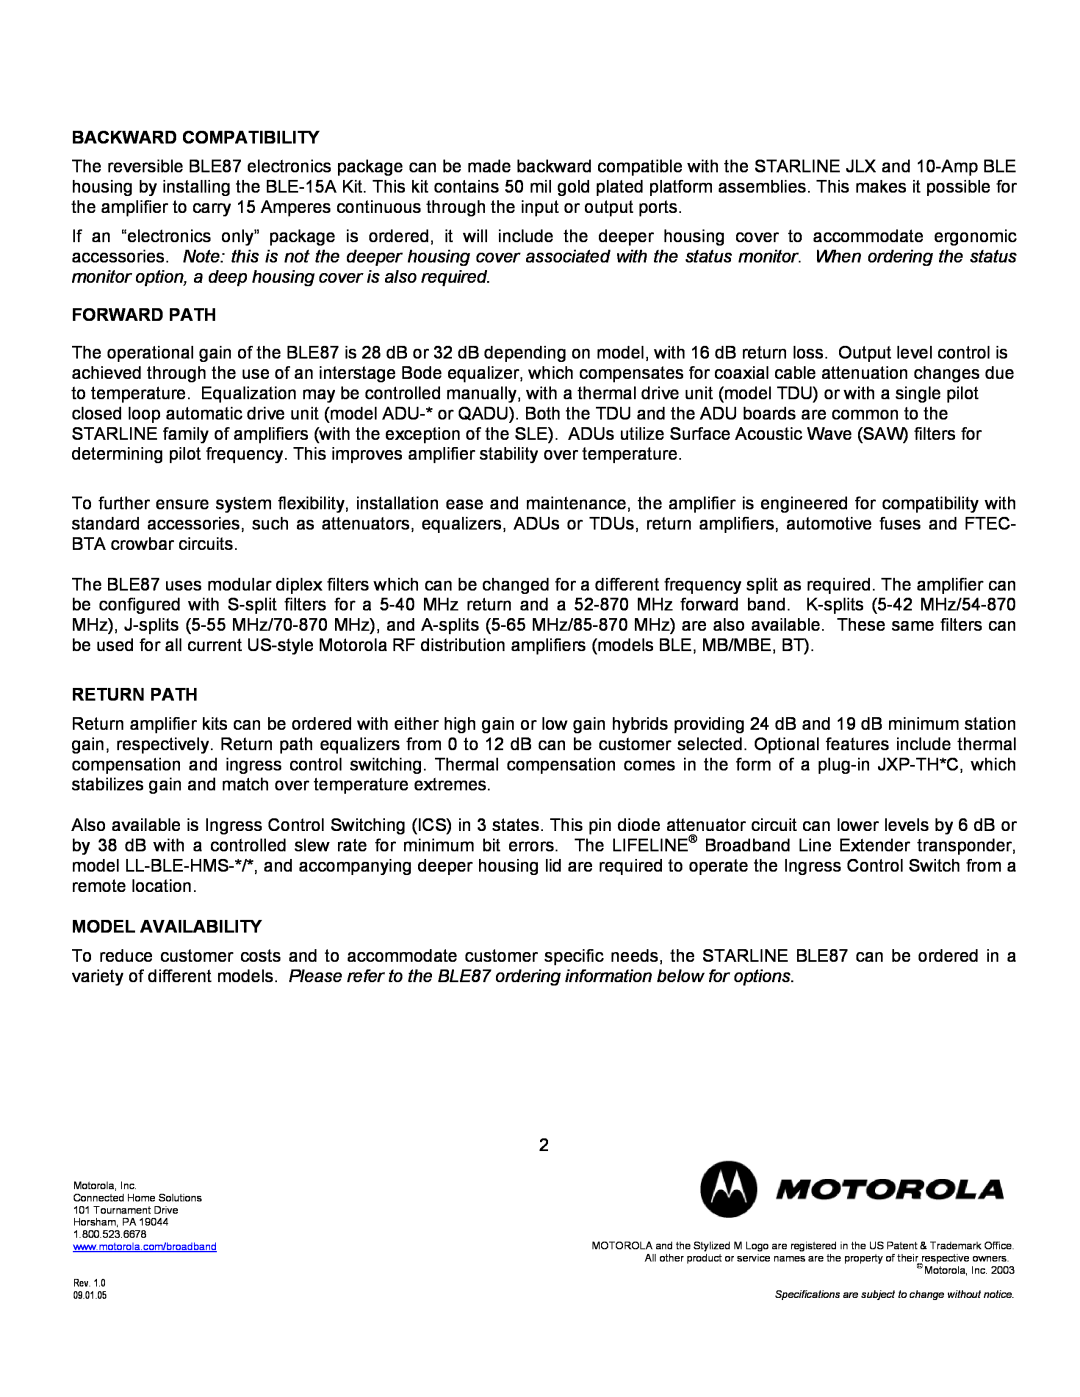 Motorola BLE87 specifications Backward Compatibility, Forward Path, Return Path, Model Availability 